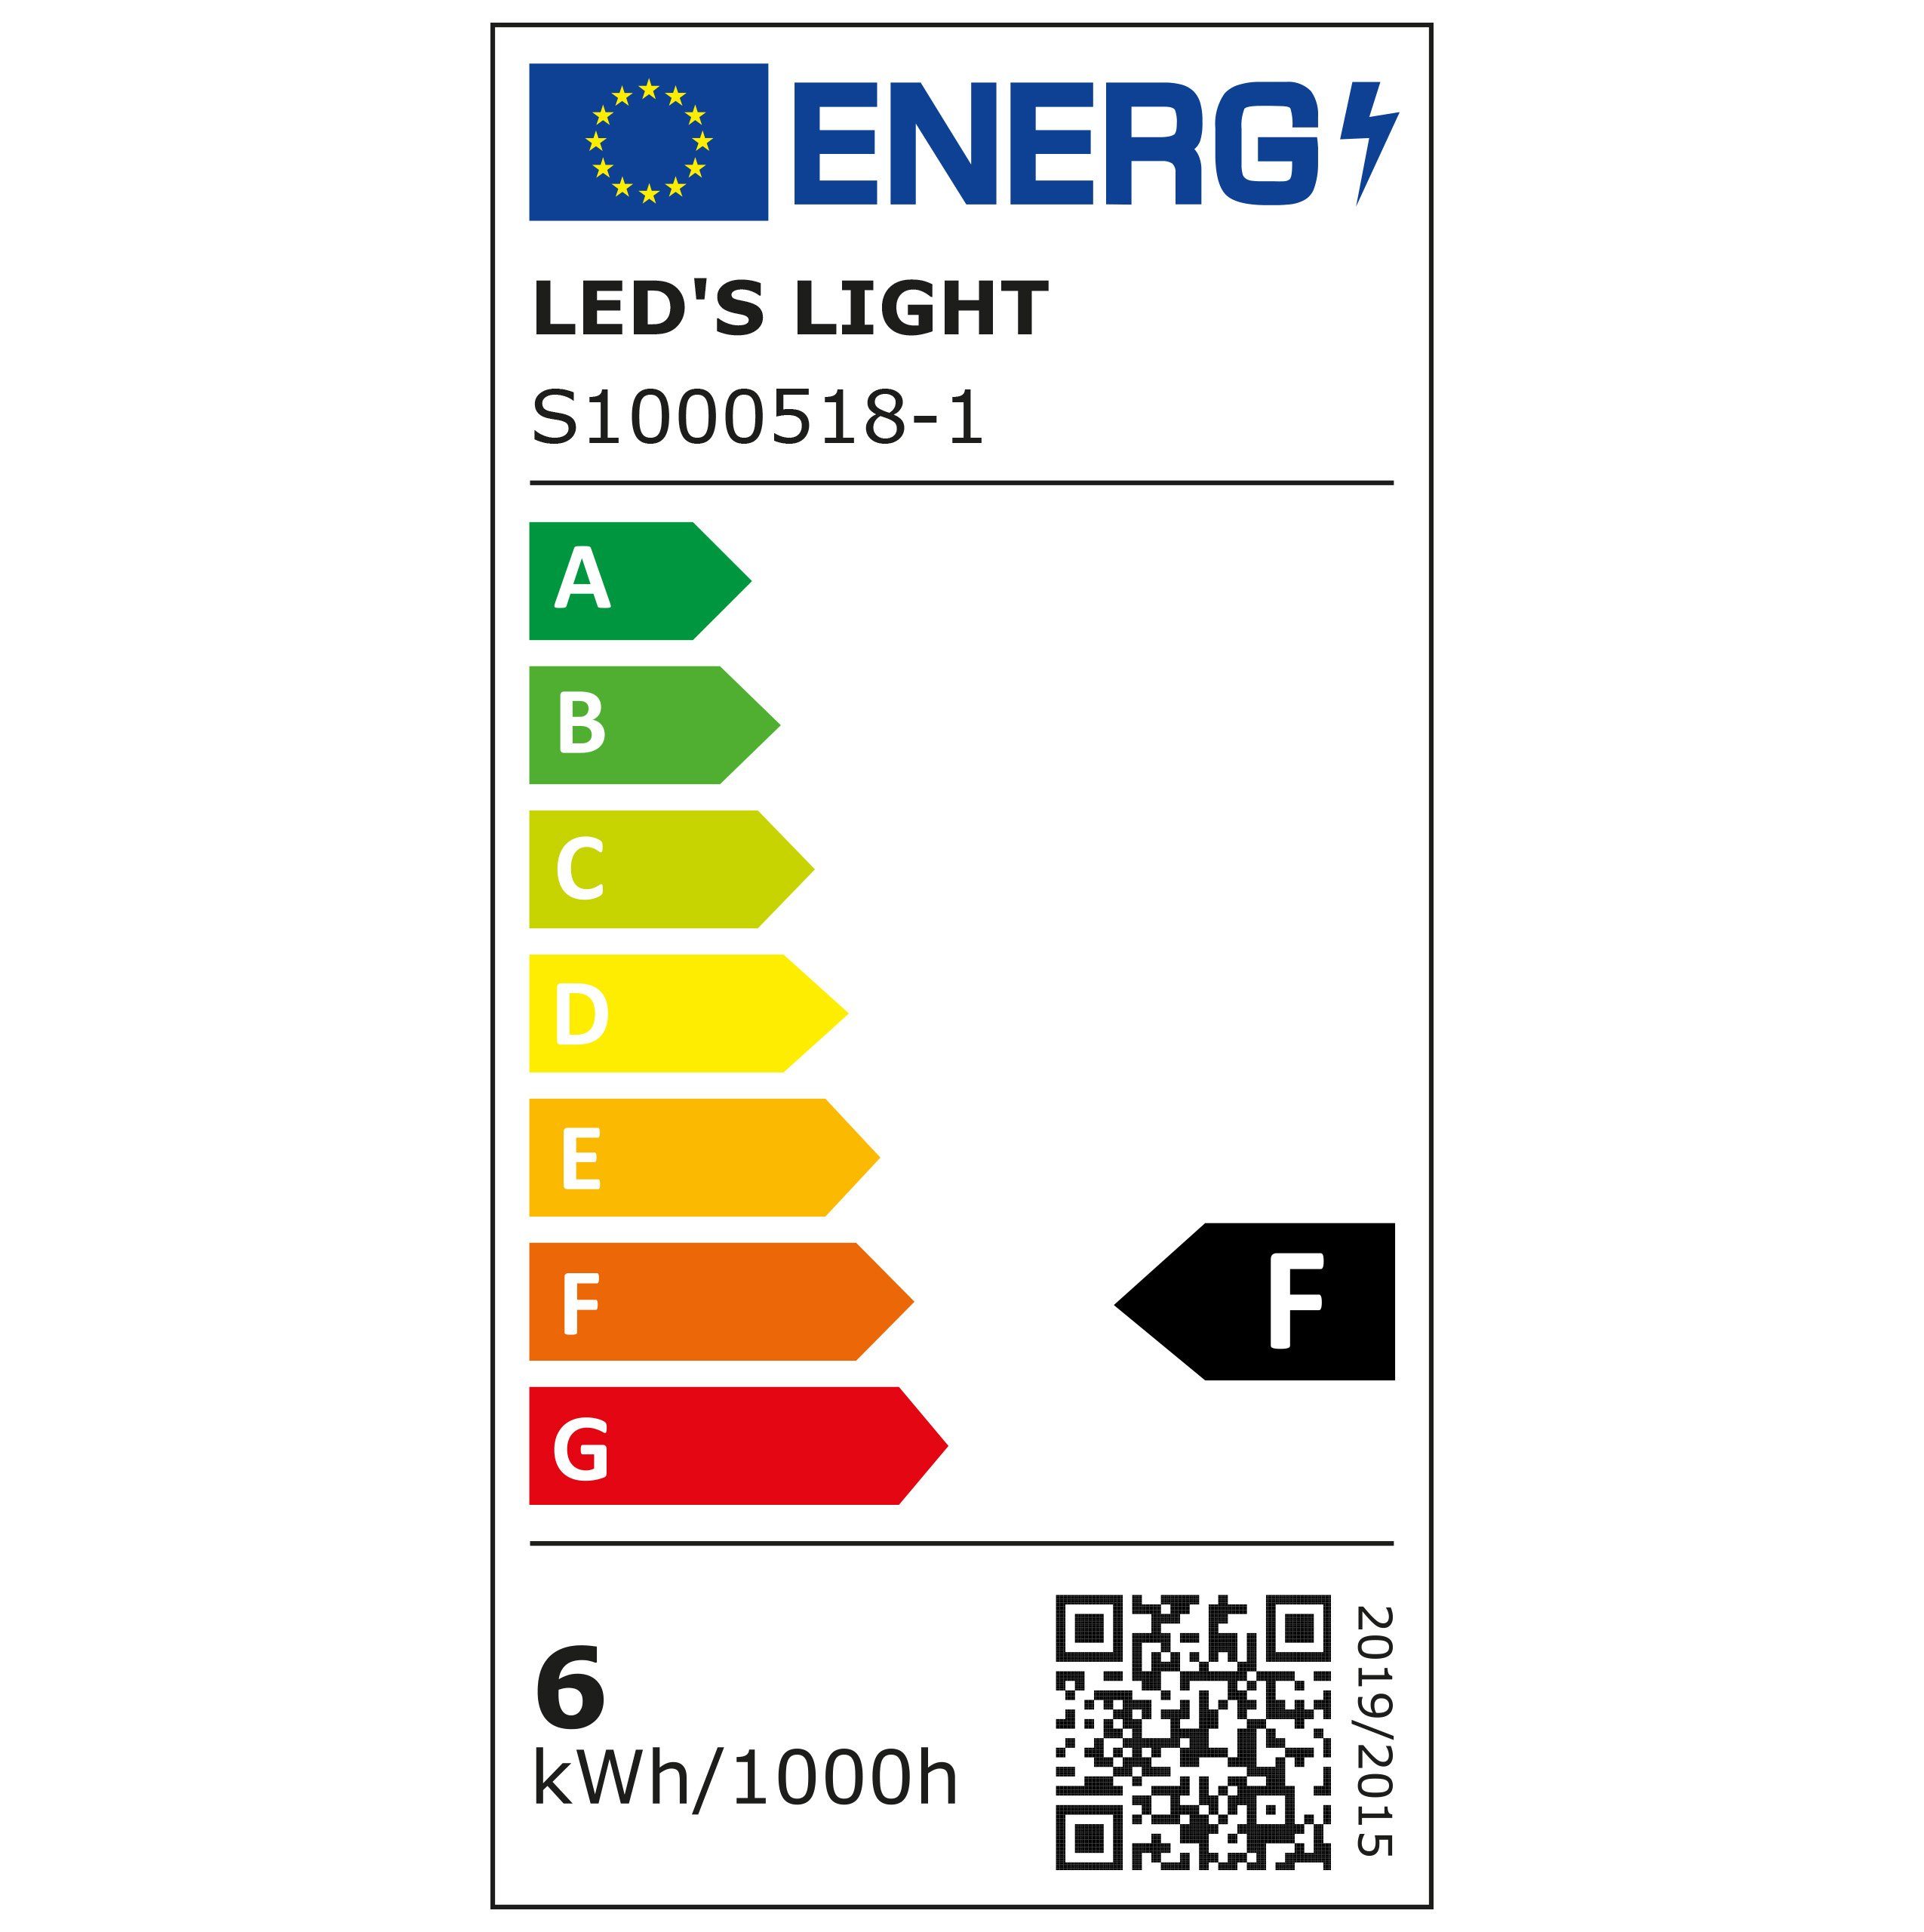 LED warmweiß LED IP54 5,5 LED's Außen-Wandleuchte, light 1000518 Watt schwarz LED, Außen-Wandleuchte